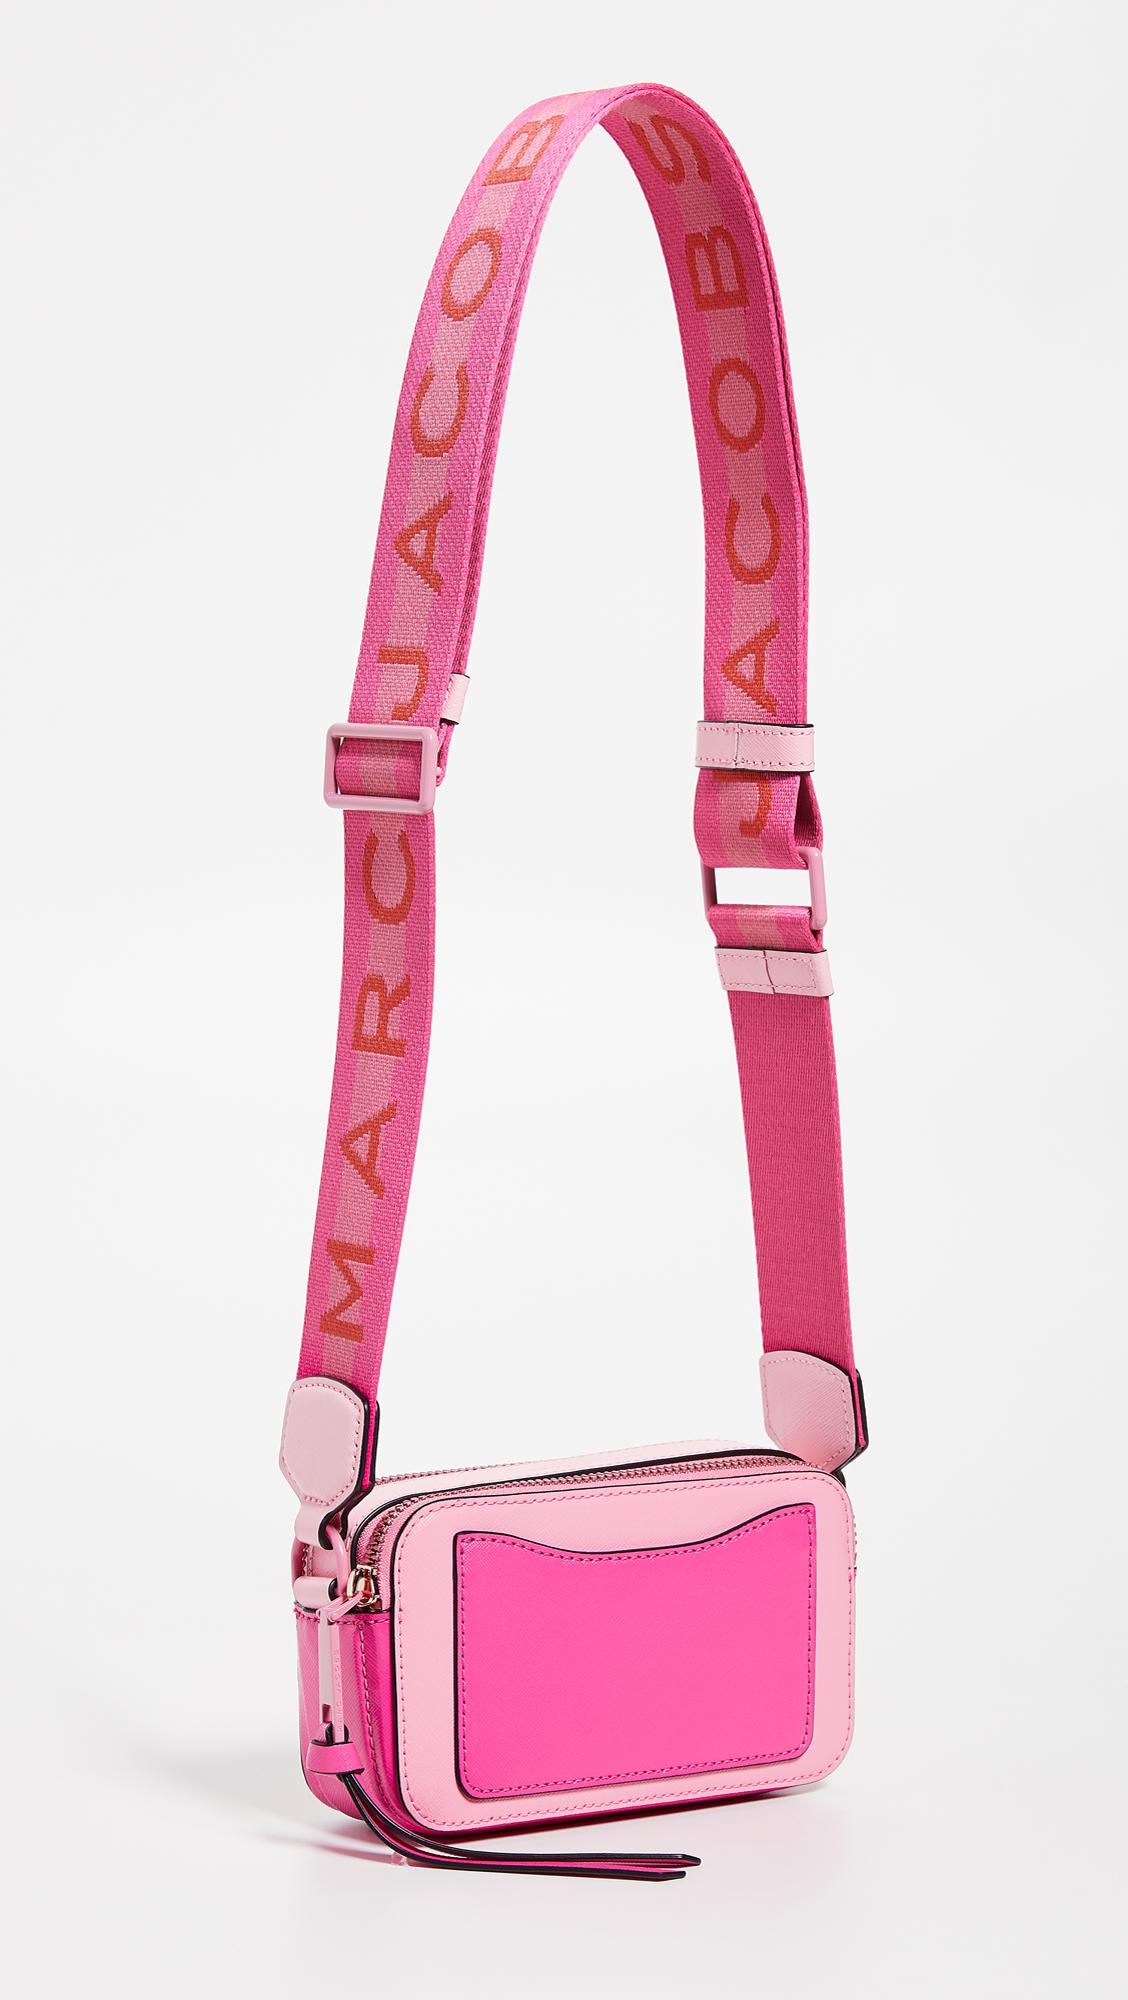 Marc Jacobs The Snapshot Camera Bag Beige/Black/Pink/Metallic